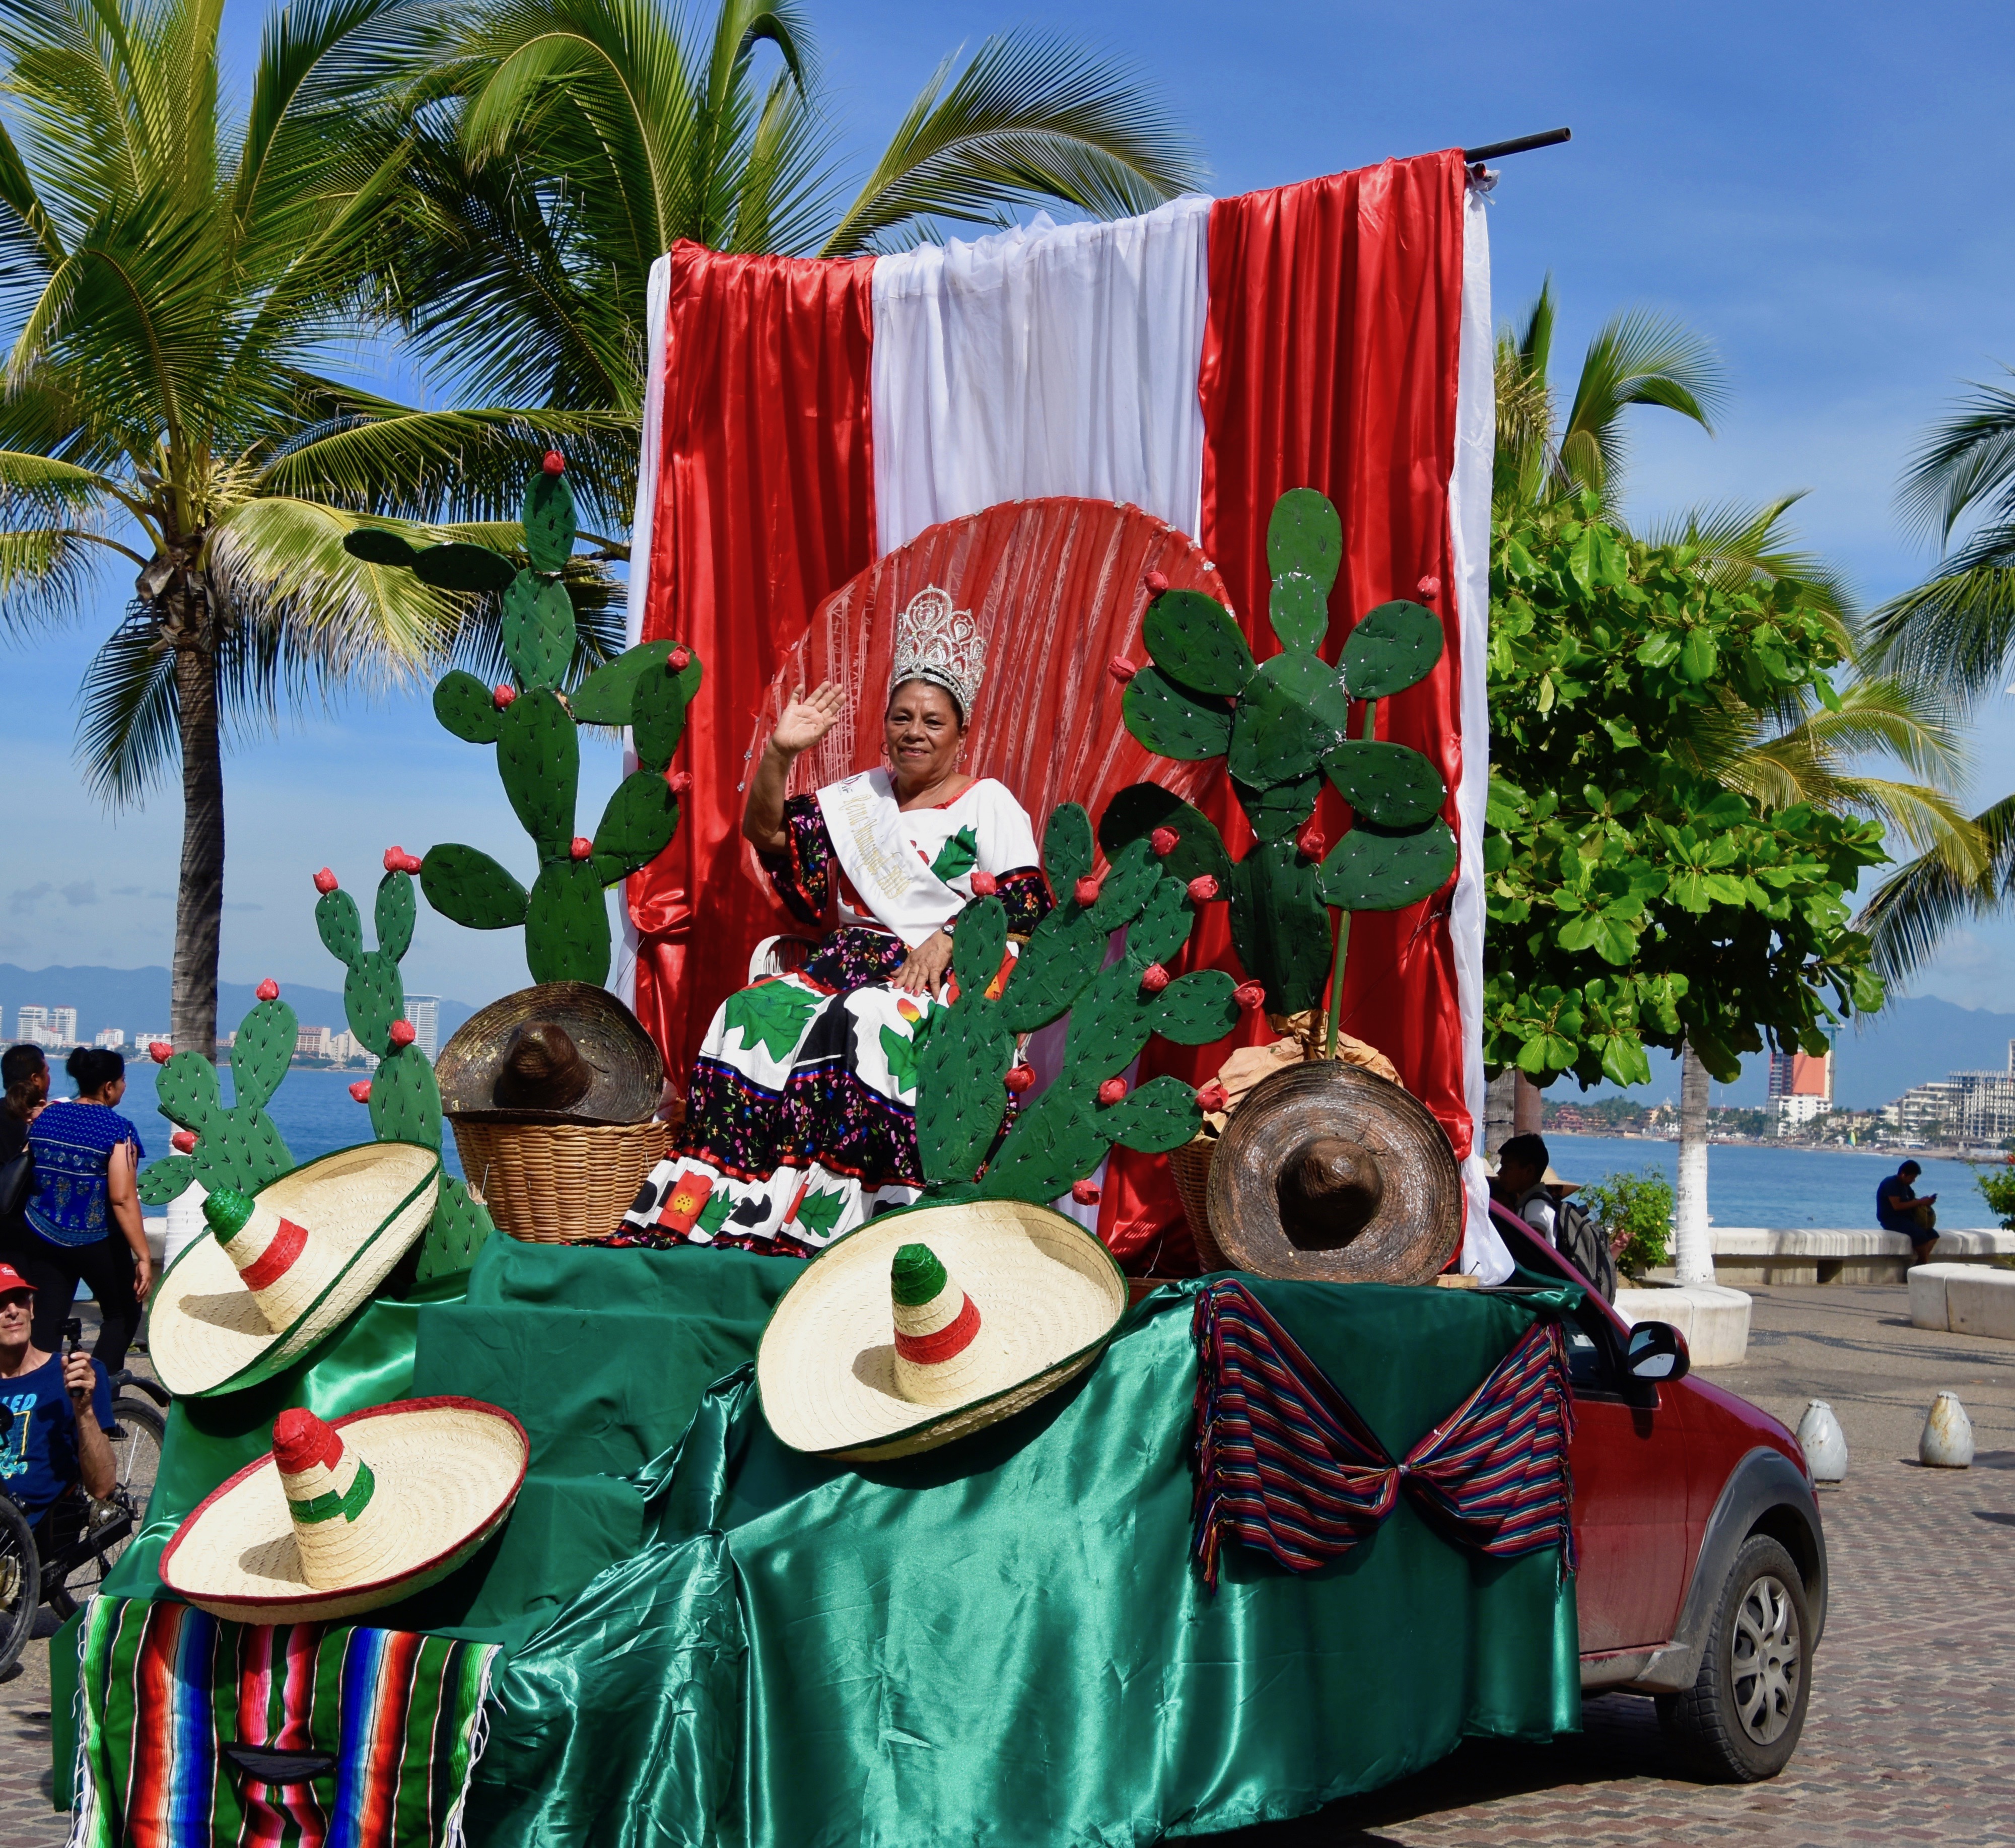 The Parade Queen, Puerto Vallarta